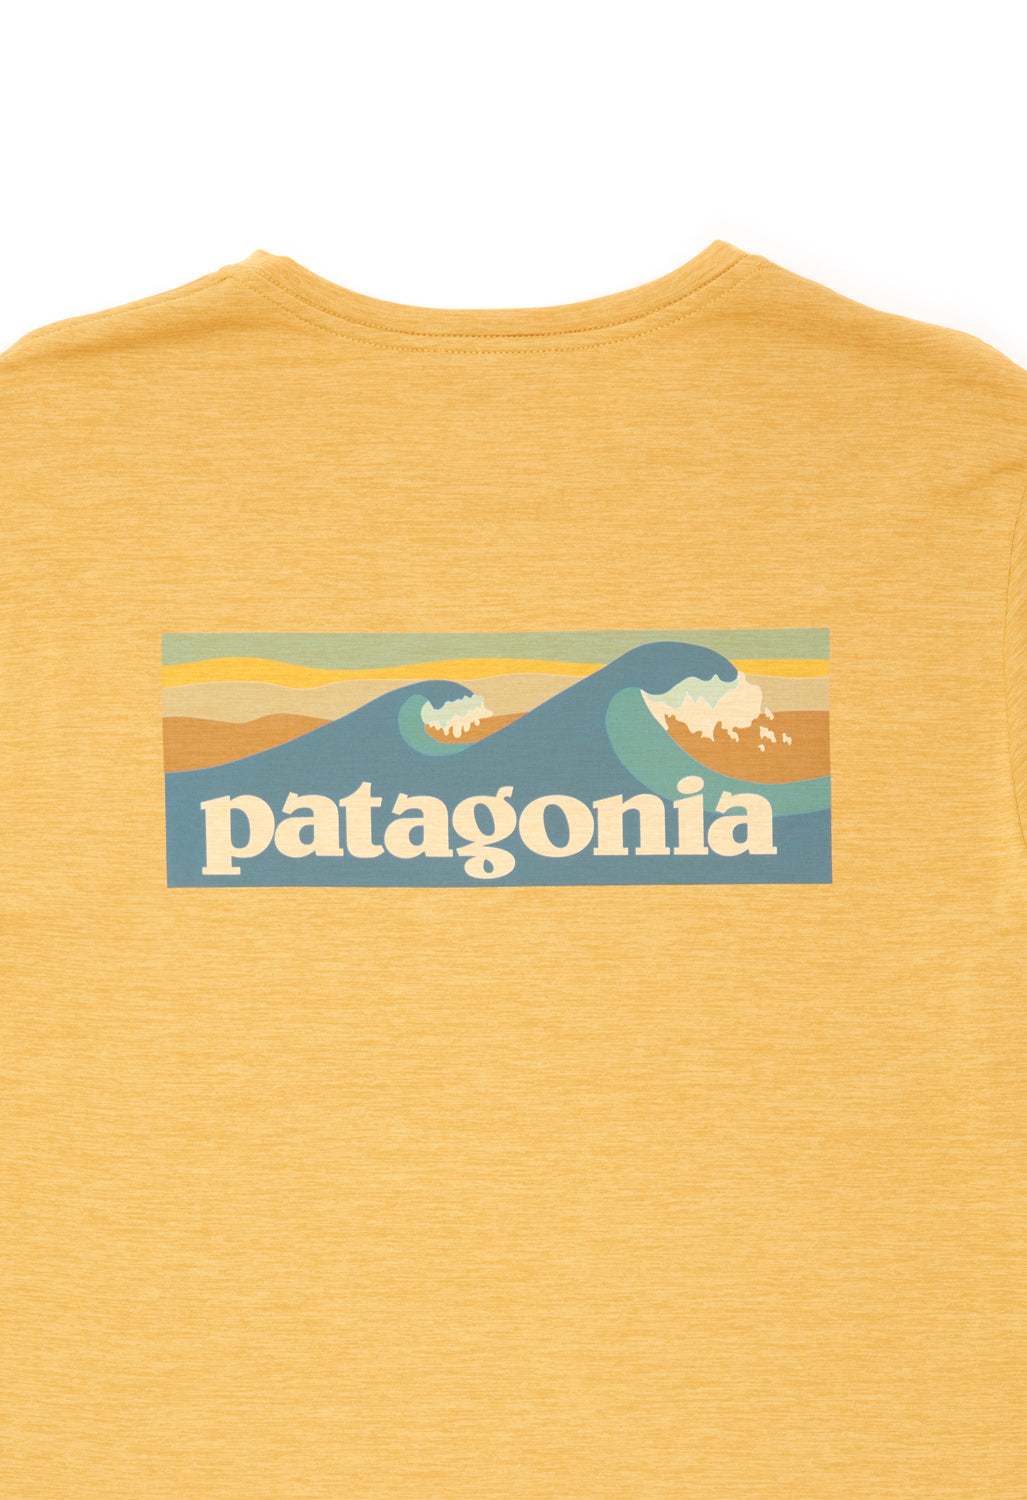 Patagonia Men's Cap Cool Daily Graphic Long Sleeve Shirt - Boardshort Logo: Pufferfish Gold X-Dye